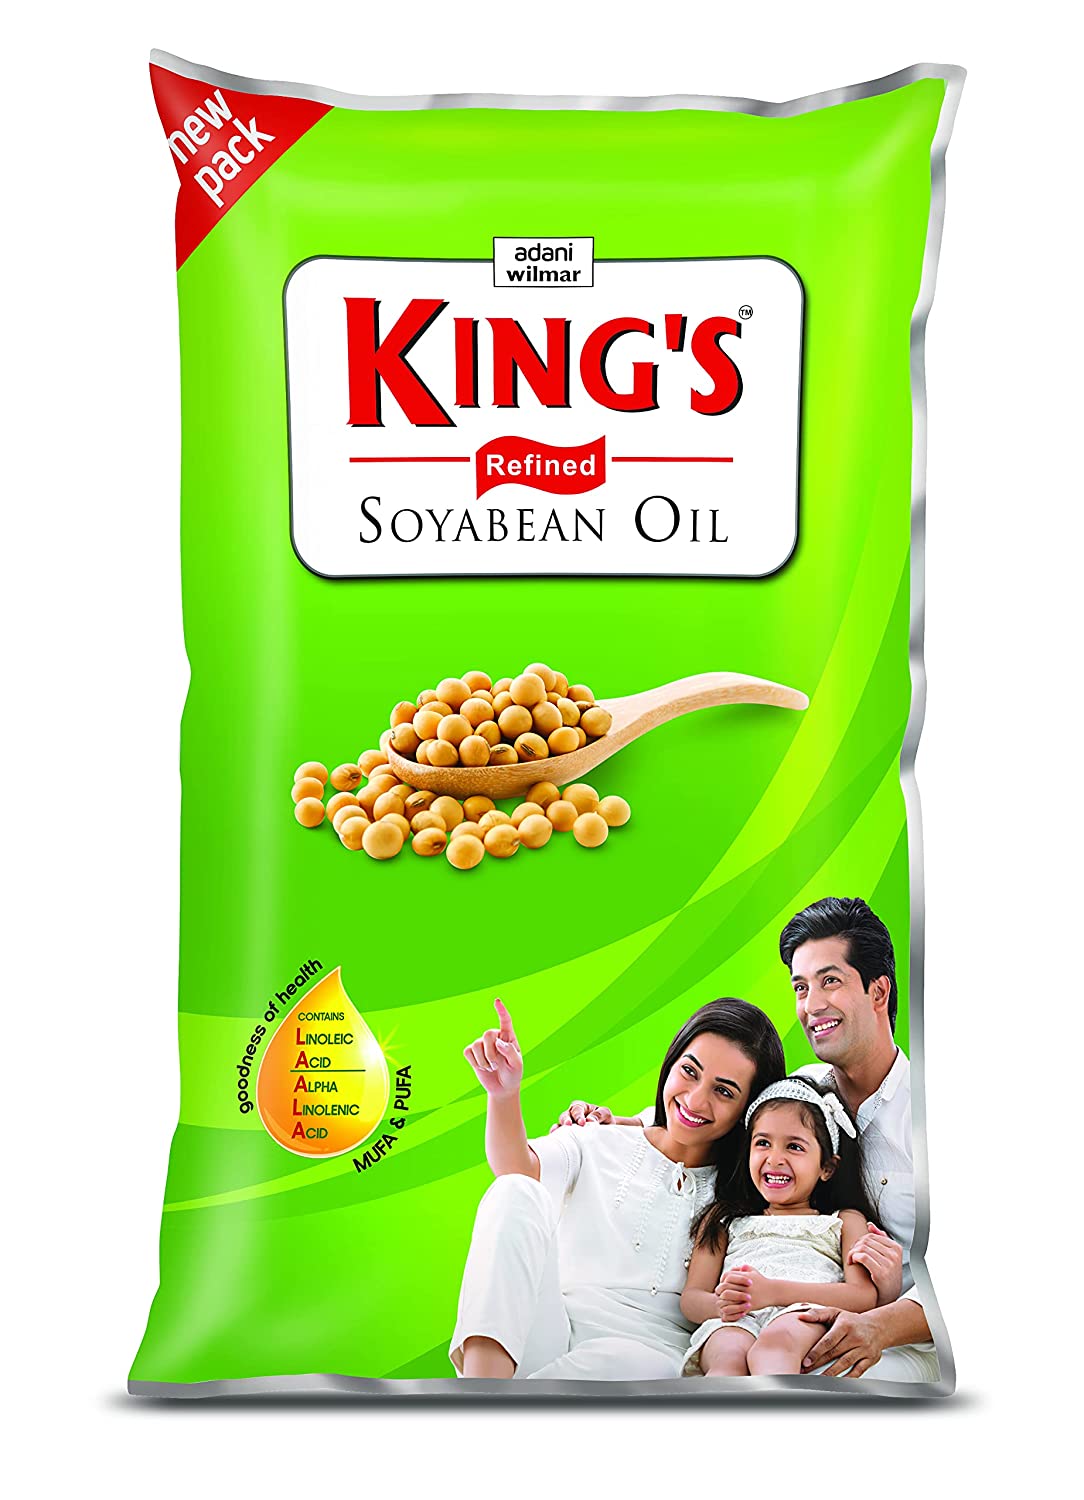 King's Refined Soyabean Oil